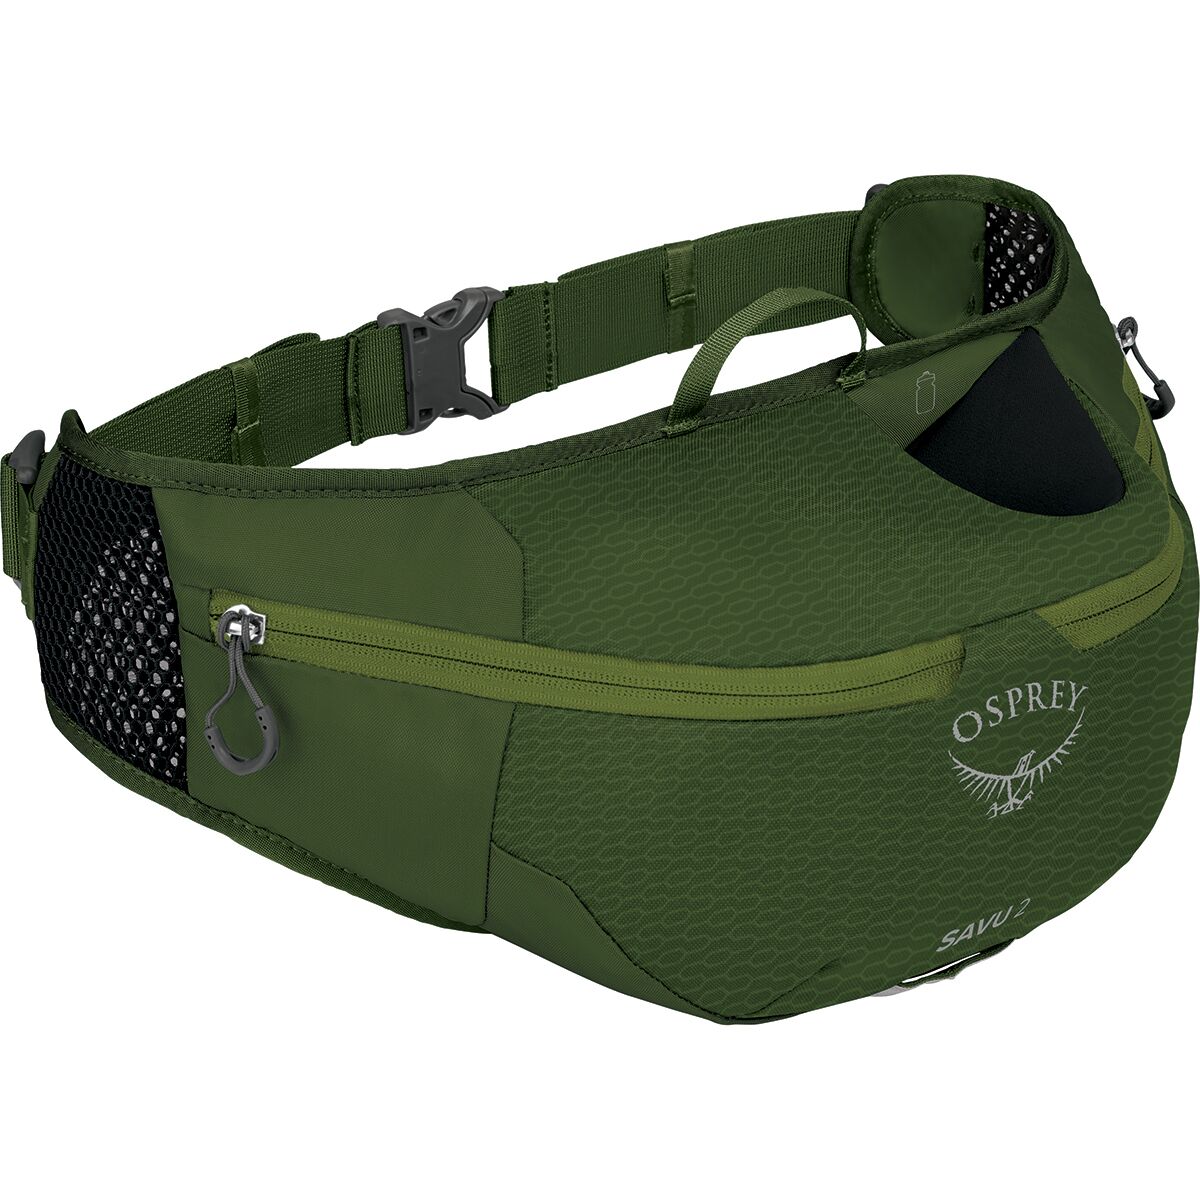 Osprey Packs Savu 2L Hydration Pack Dustmoss Green, One Size